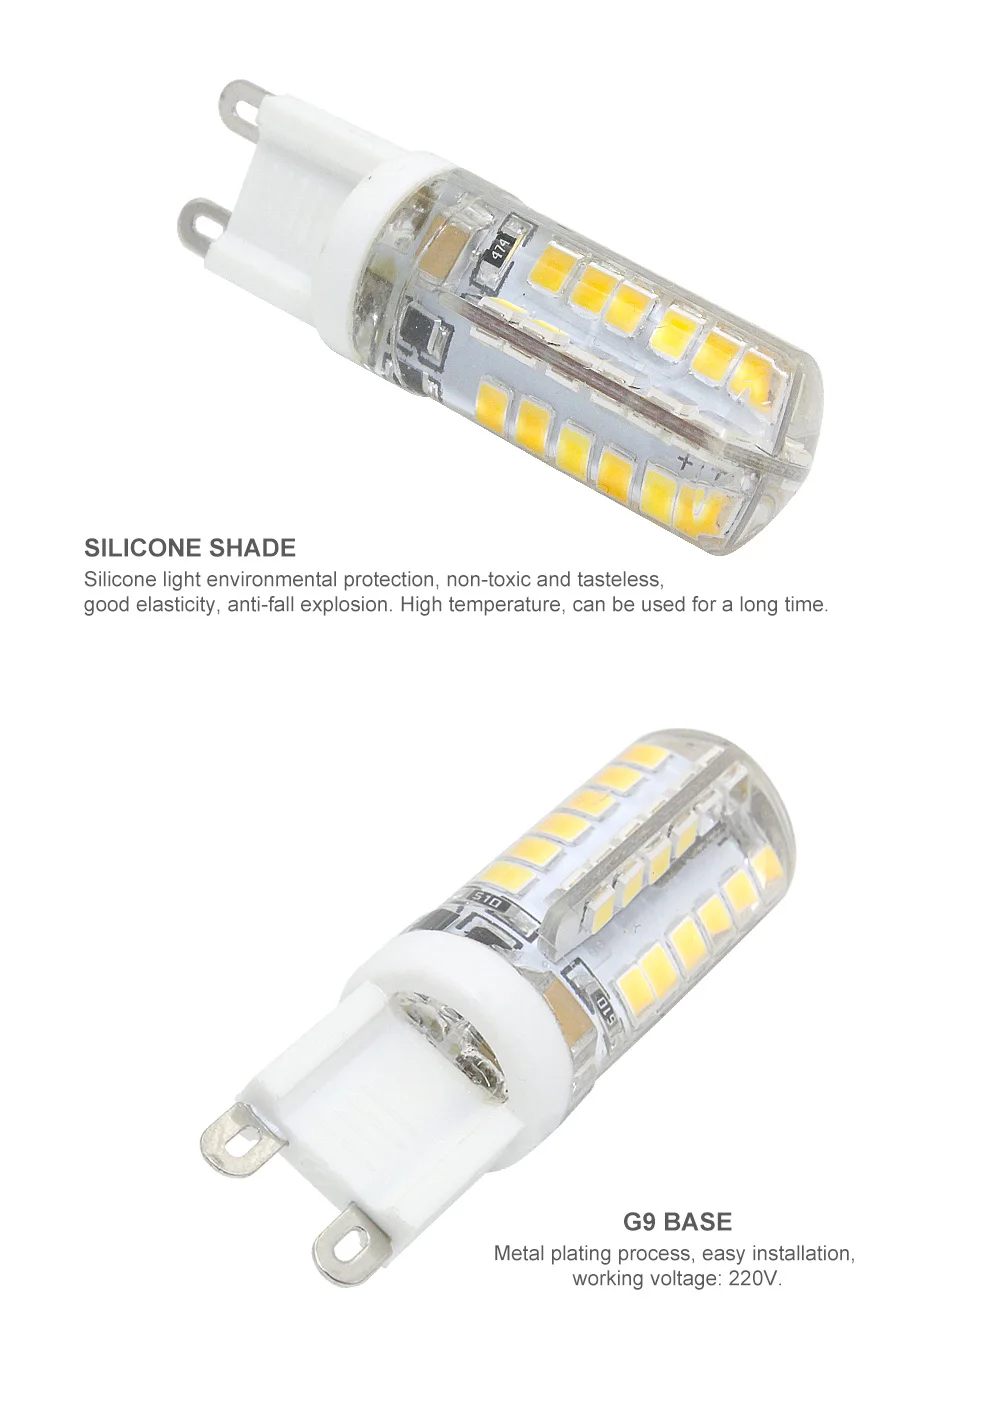 1pcs Silicone Ampoule G9 LED Corn Bulb AC 220V Spotlight lamp 48 64 104 152leds Replace 20W 30W 40W 50W Halogen light Lamparas